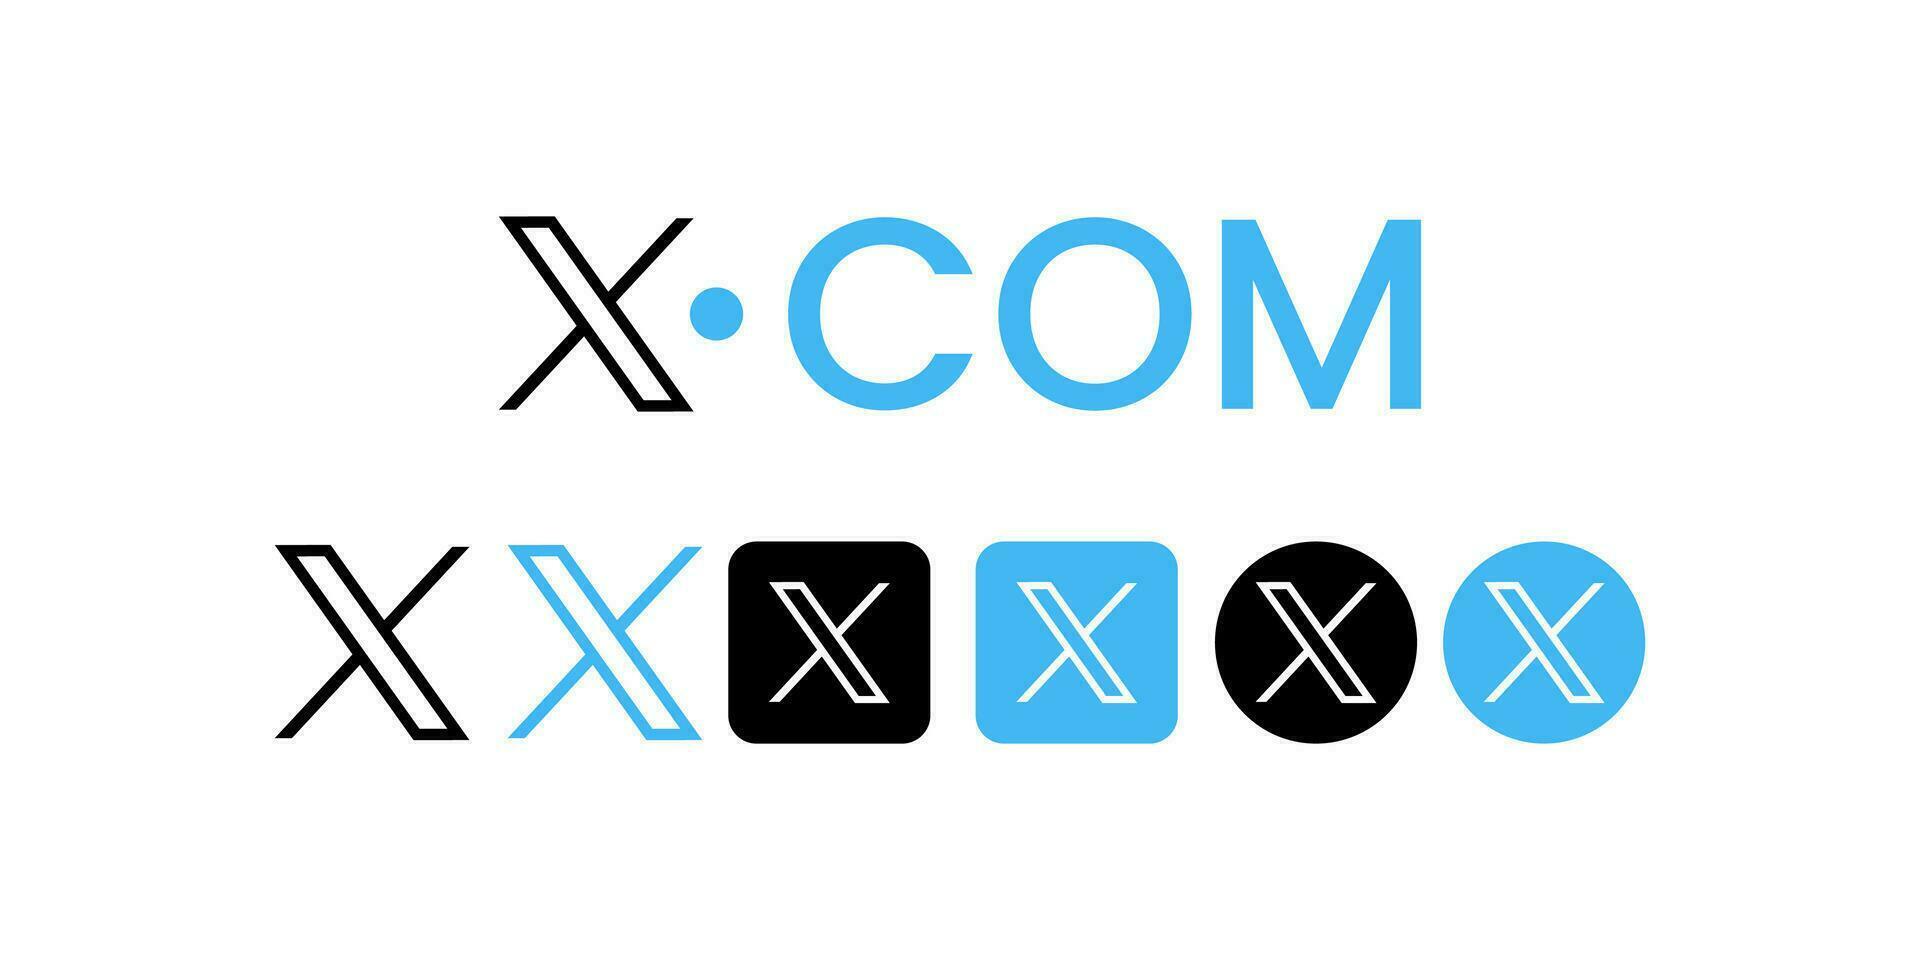 Twitter new logo set . Twitter icons. Twitter X logo Vector. High